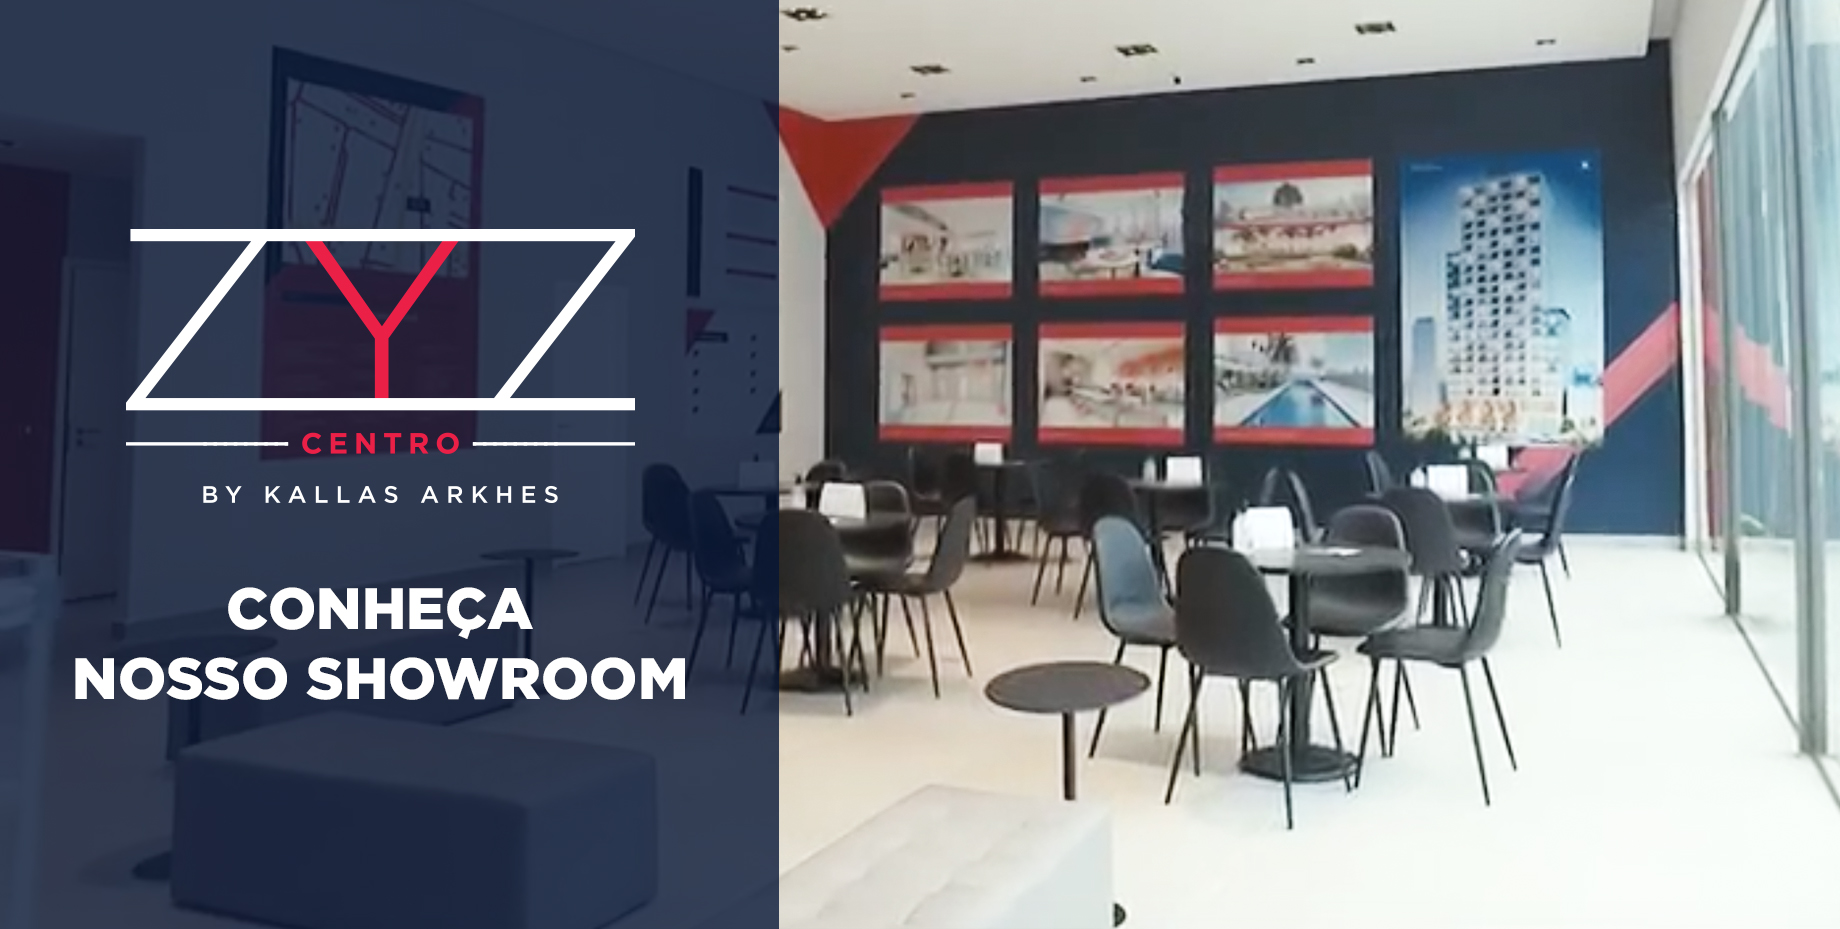 Showroom ZYZ Centro by Kallas Arkhes